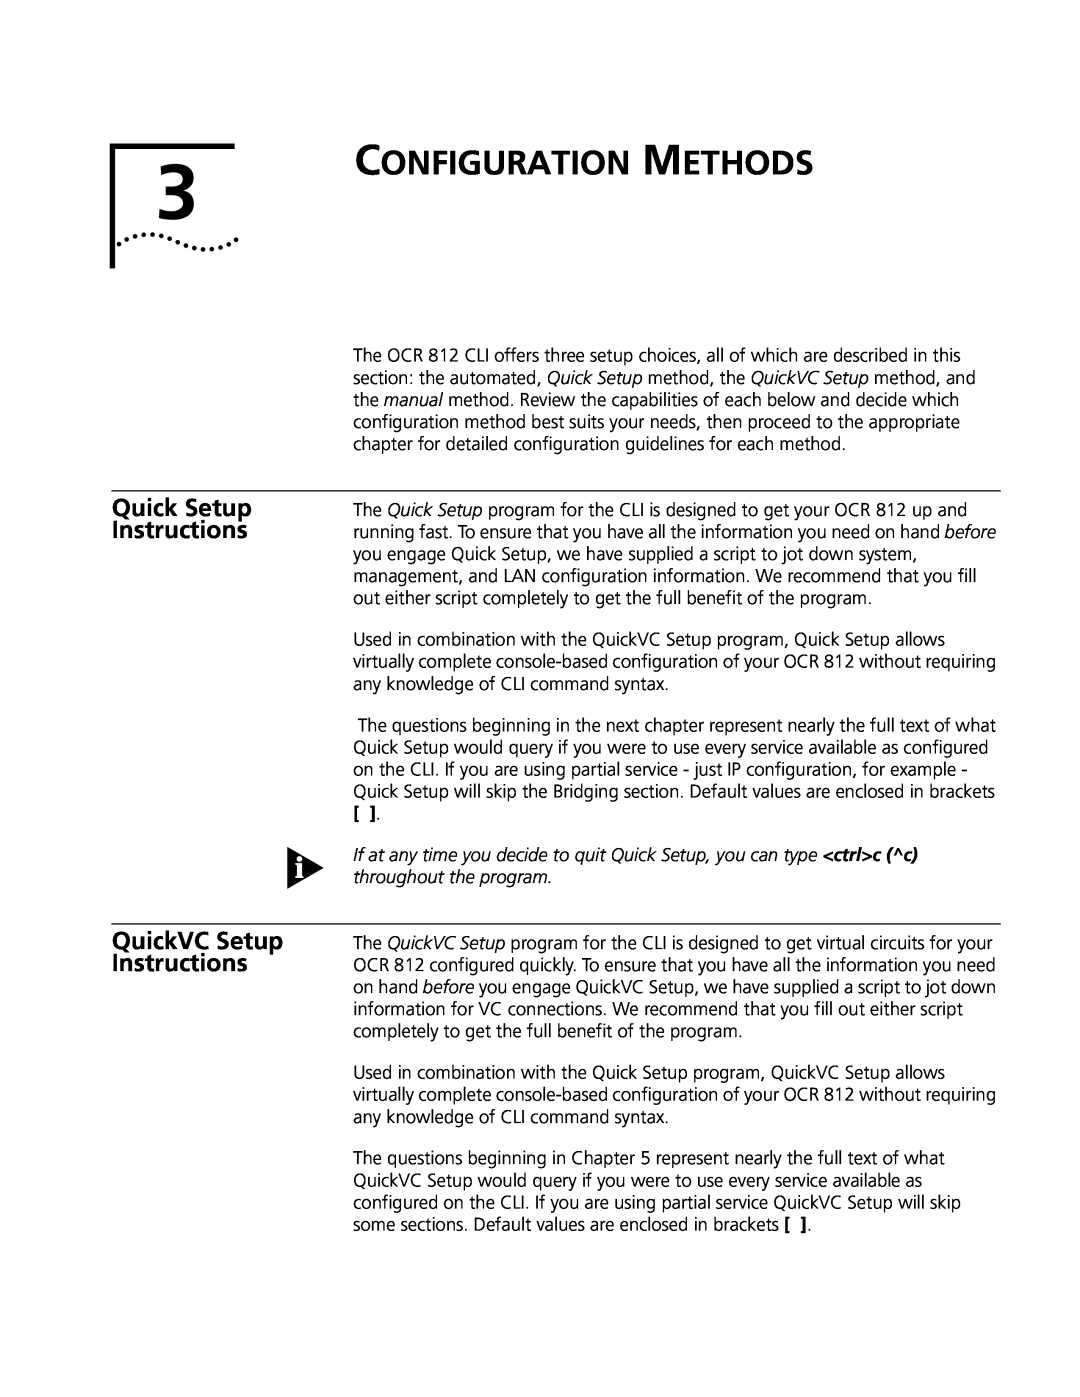 3Com OfficeConnect Remote 812 manual Configuration Methods, Quick Setup Instructions, QuickVC Setup Instructions 